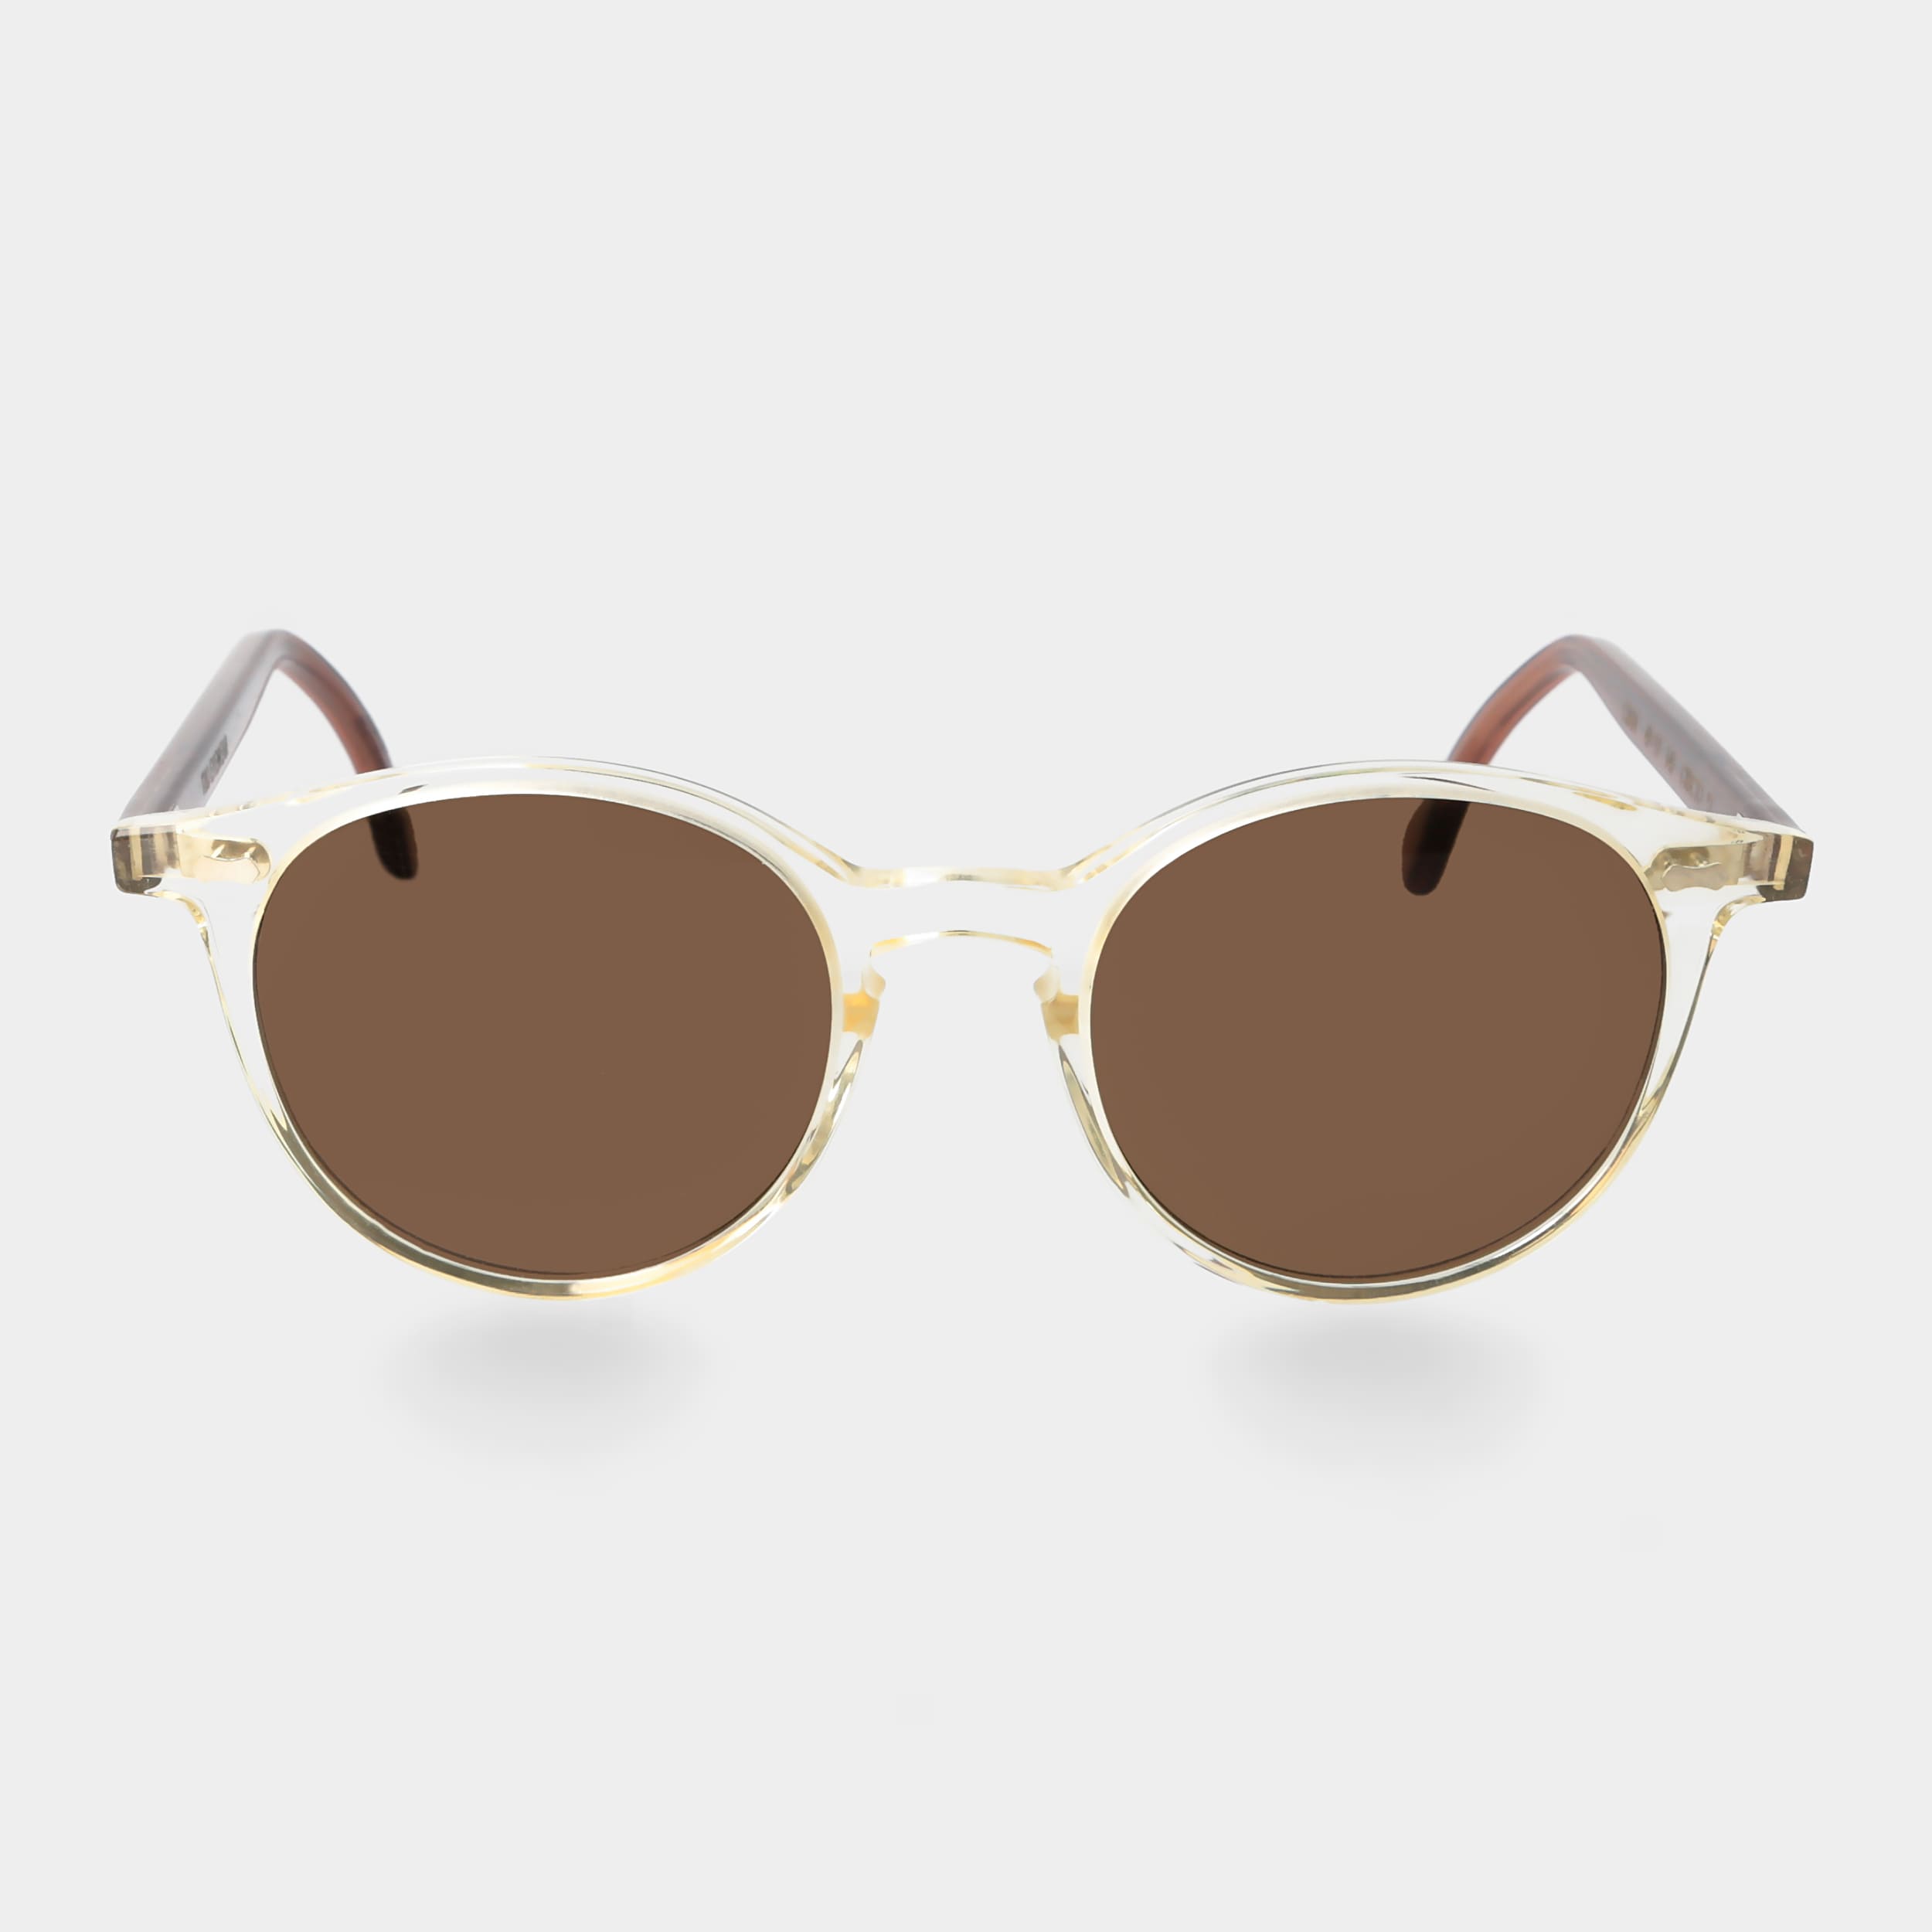 Sunglasses with Brown Lenses, handmade Eyewear | in TBD Italy